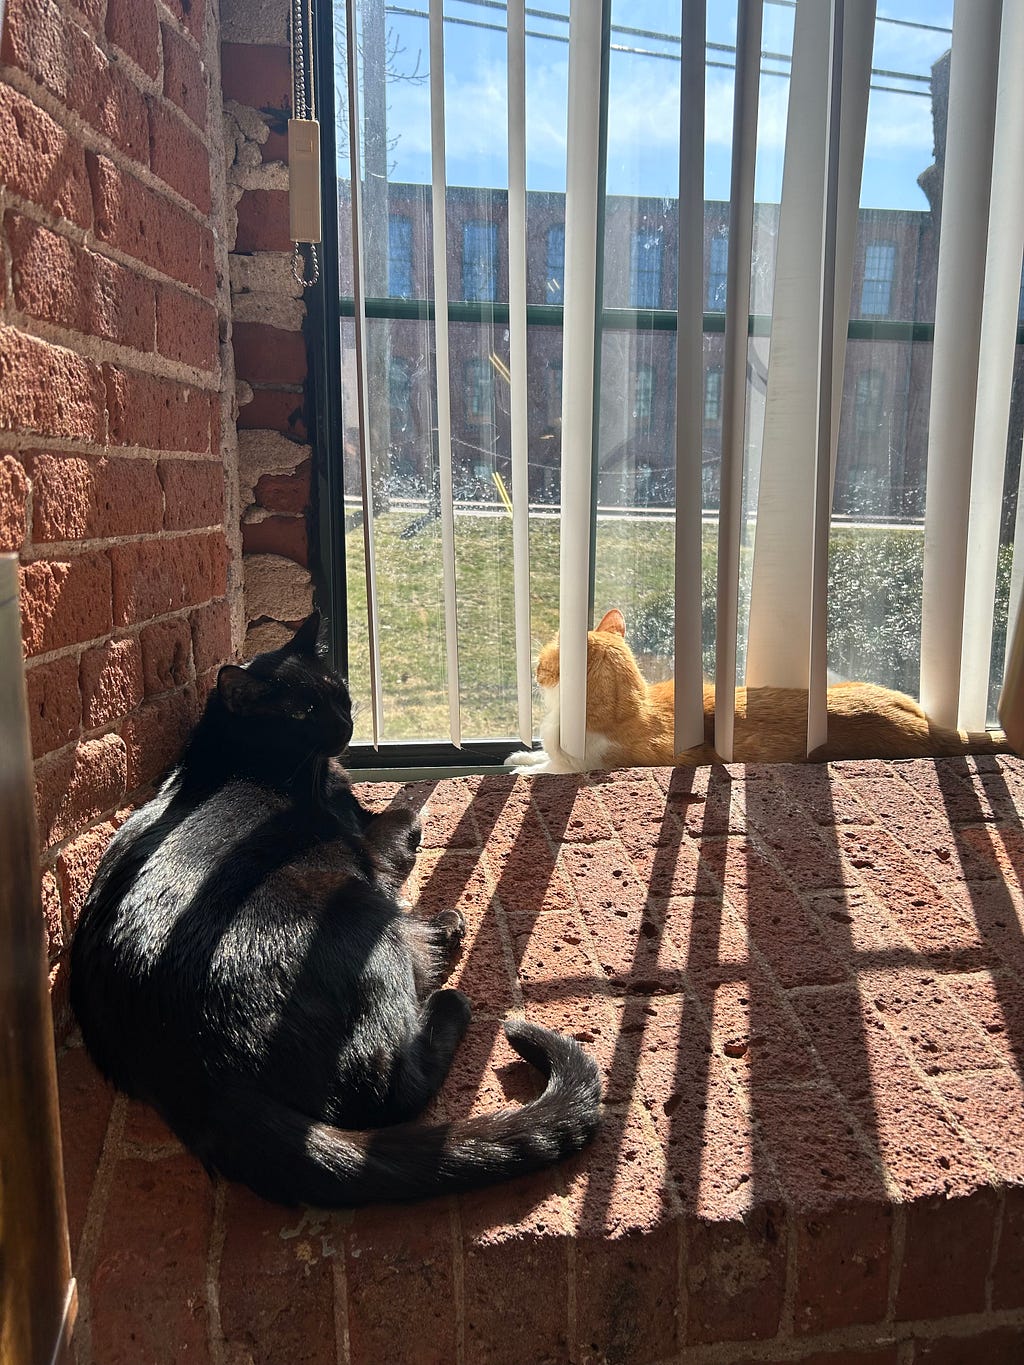 My cats enjoying a windowsill lounge in the sunshine